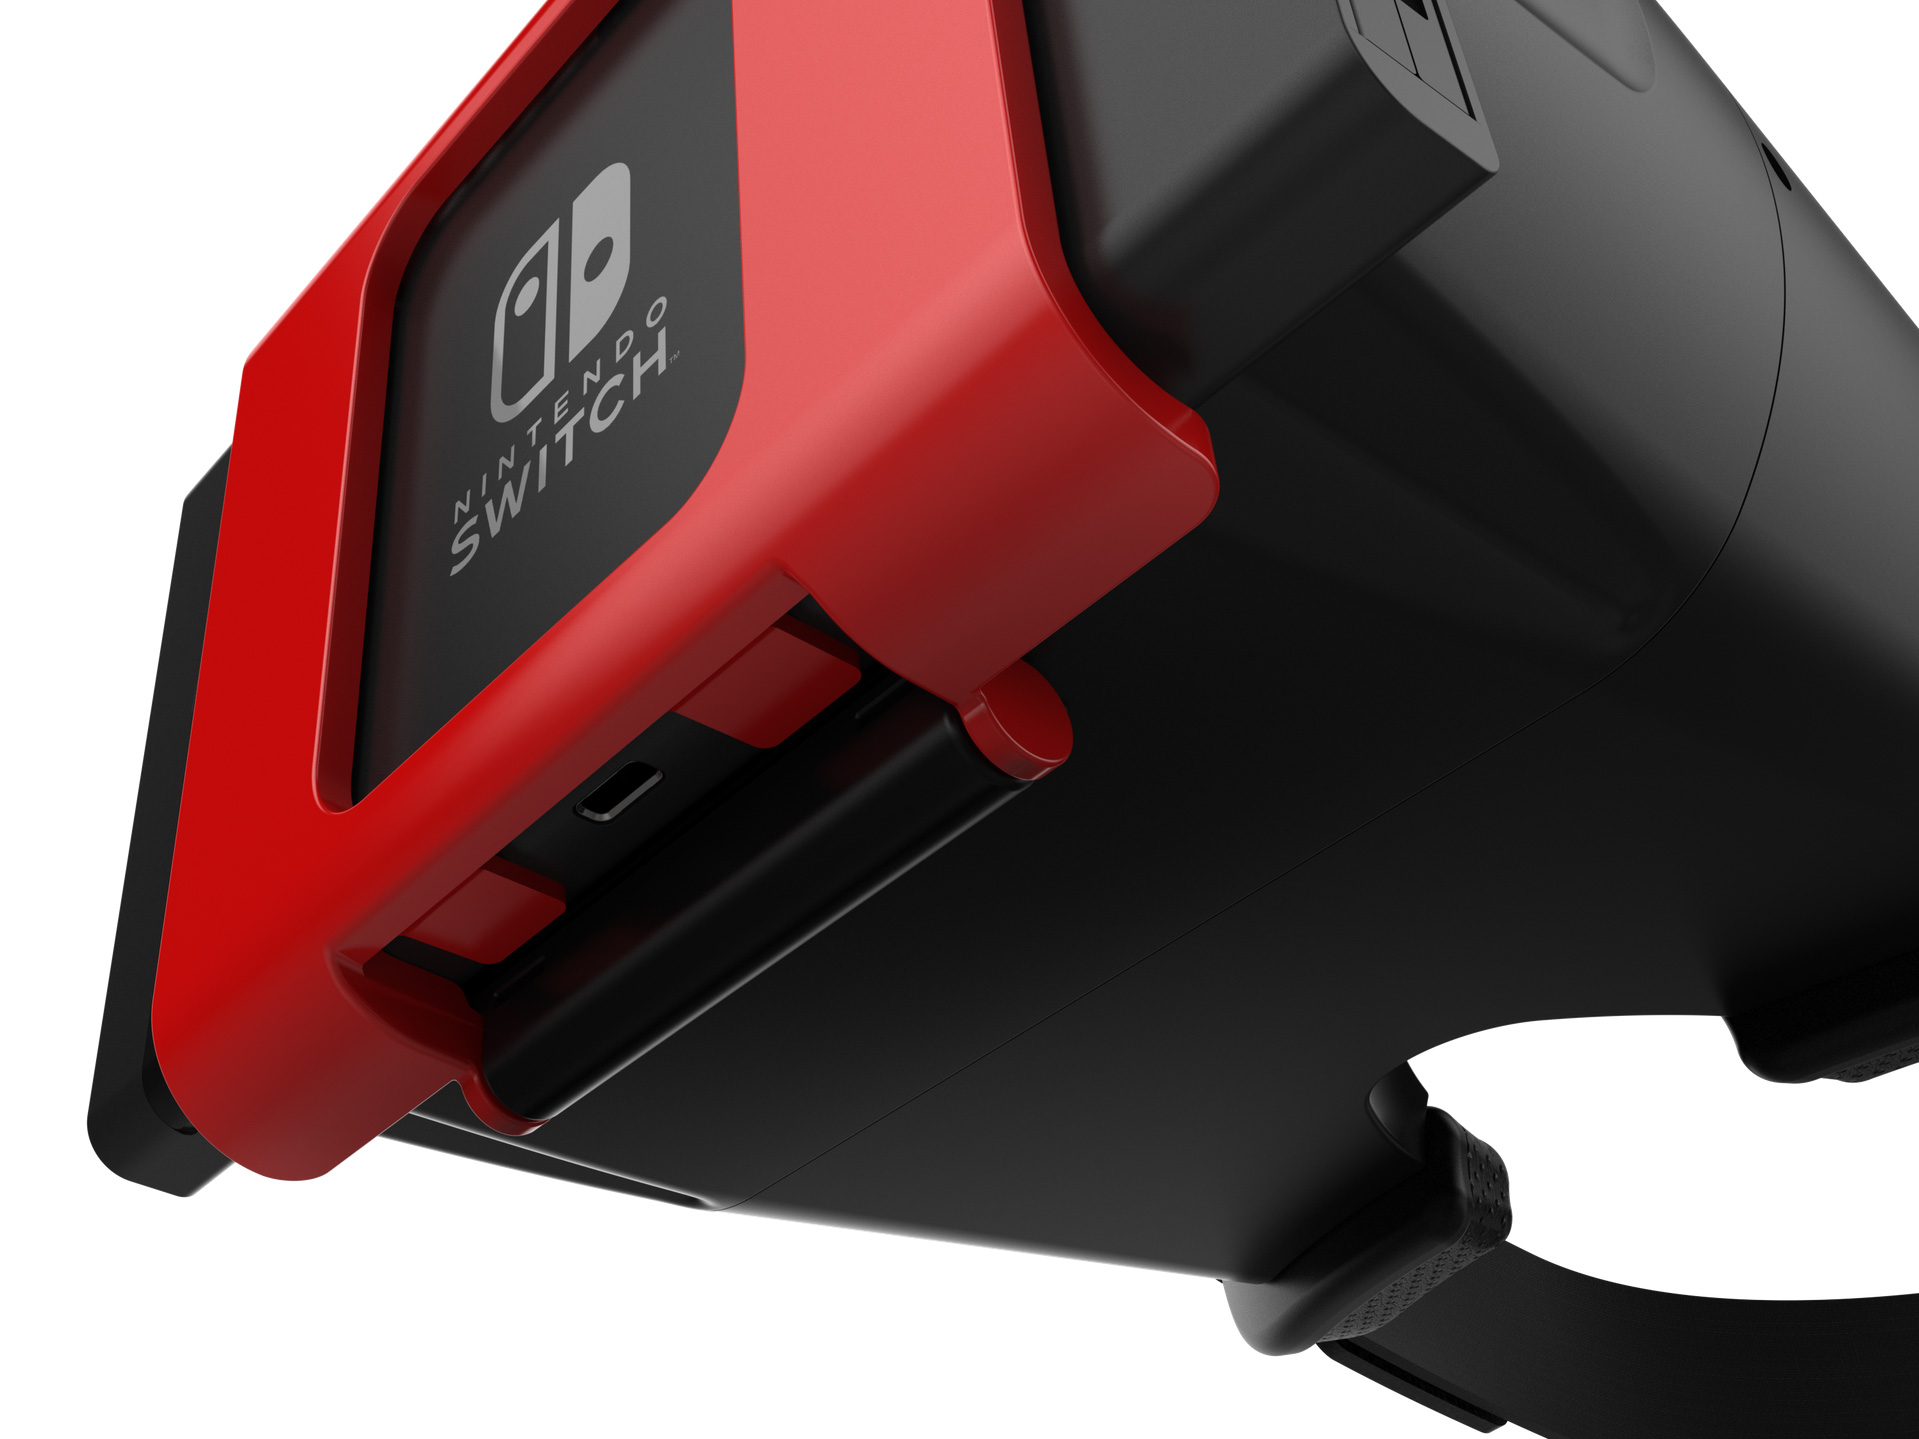 Nintendo Switch VR headset